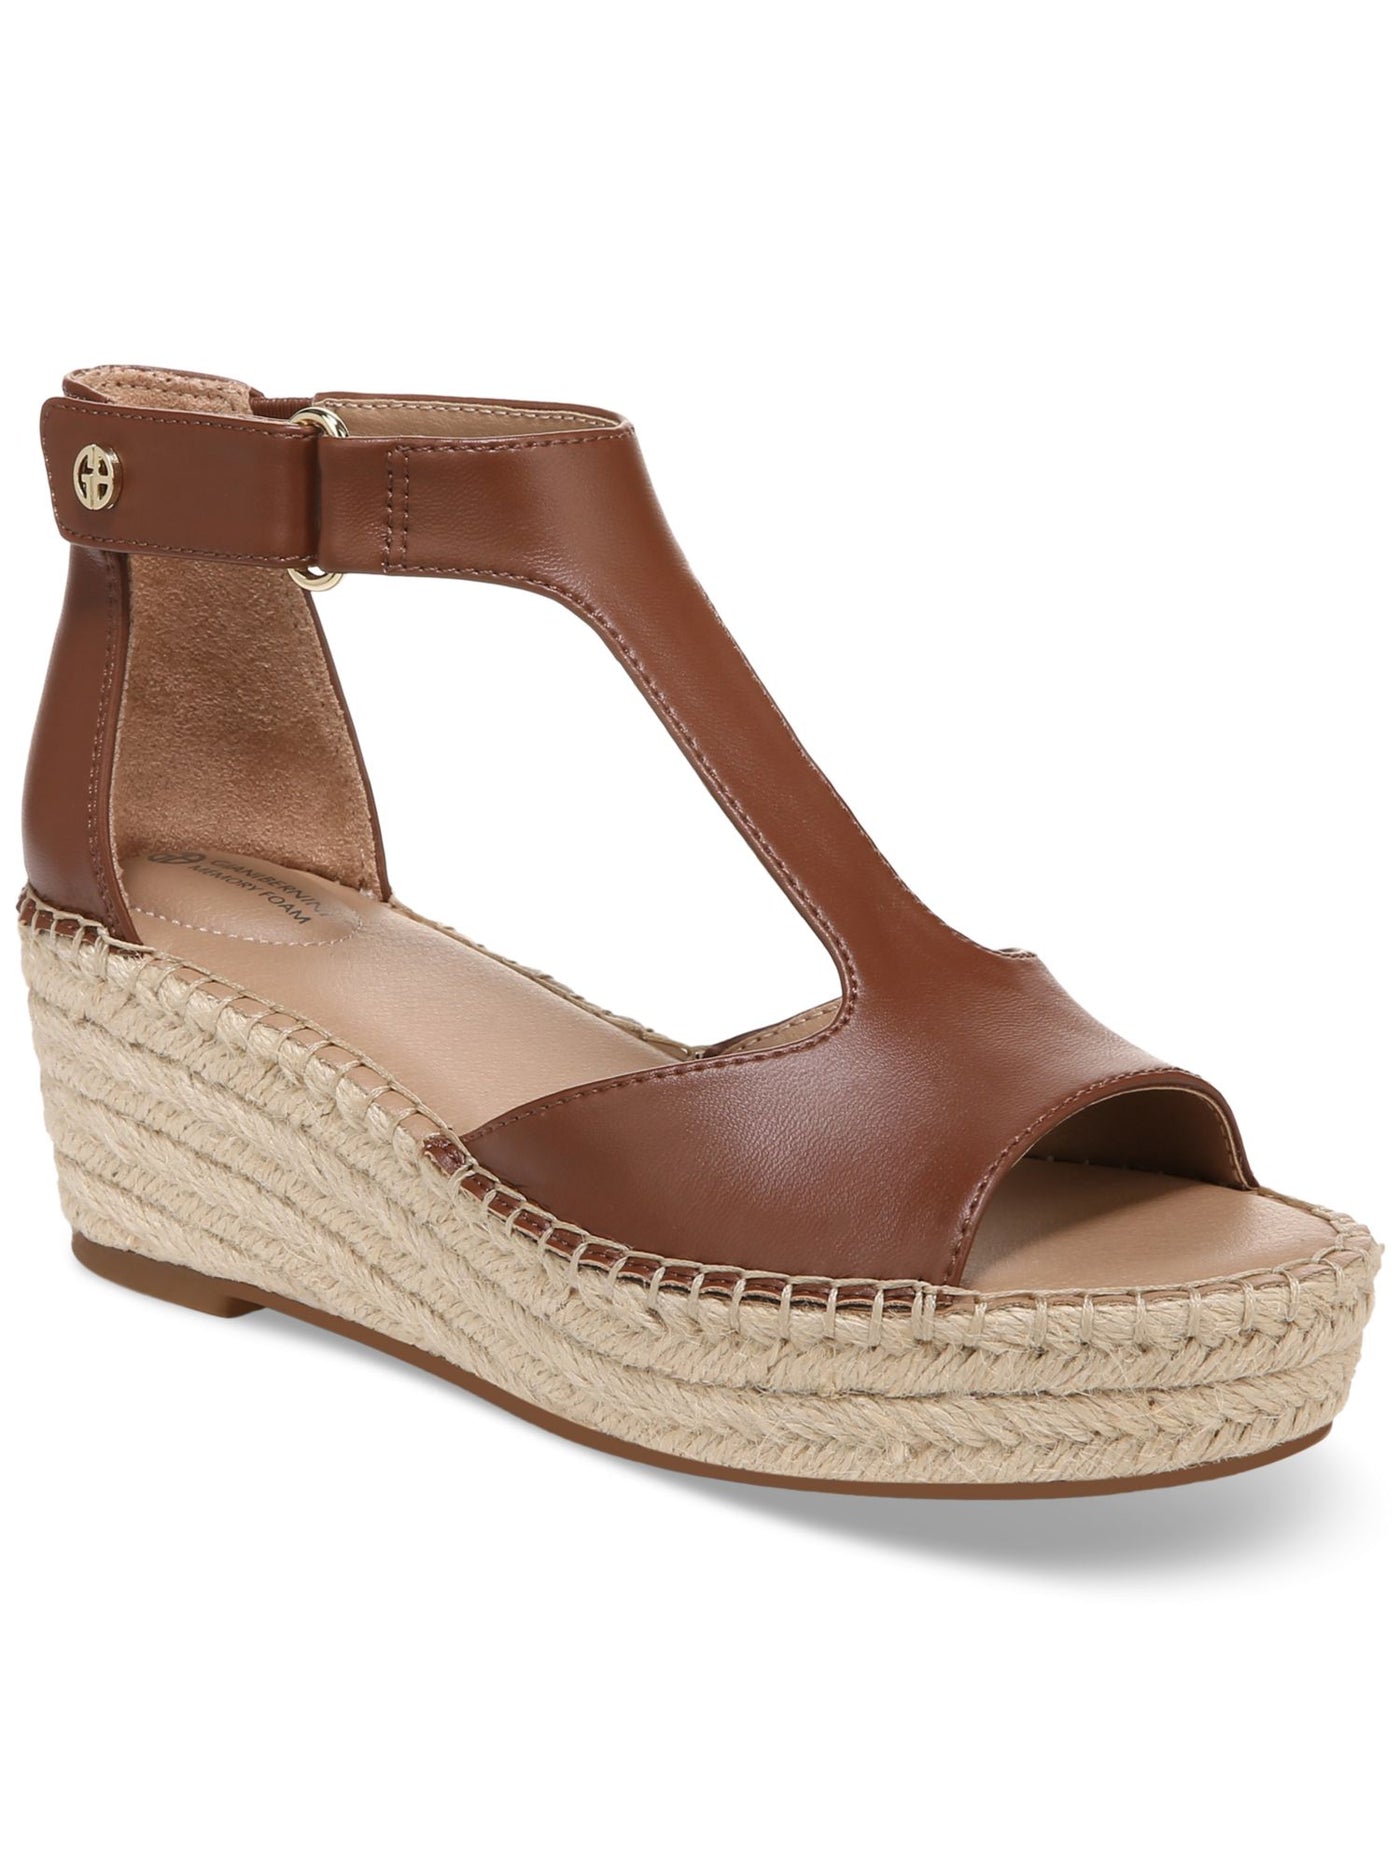 GIANI BERNINI Womens Brown 1" Platformcushioned T-Strap Goring Caylaa Open Toe Wedge Espadrille Shoes 9 M